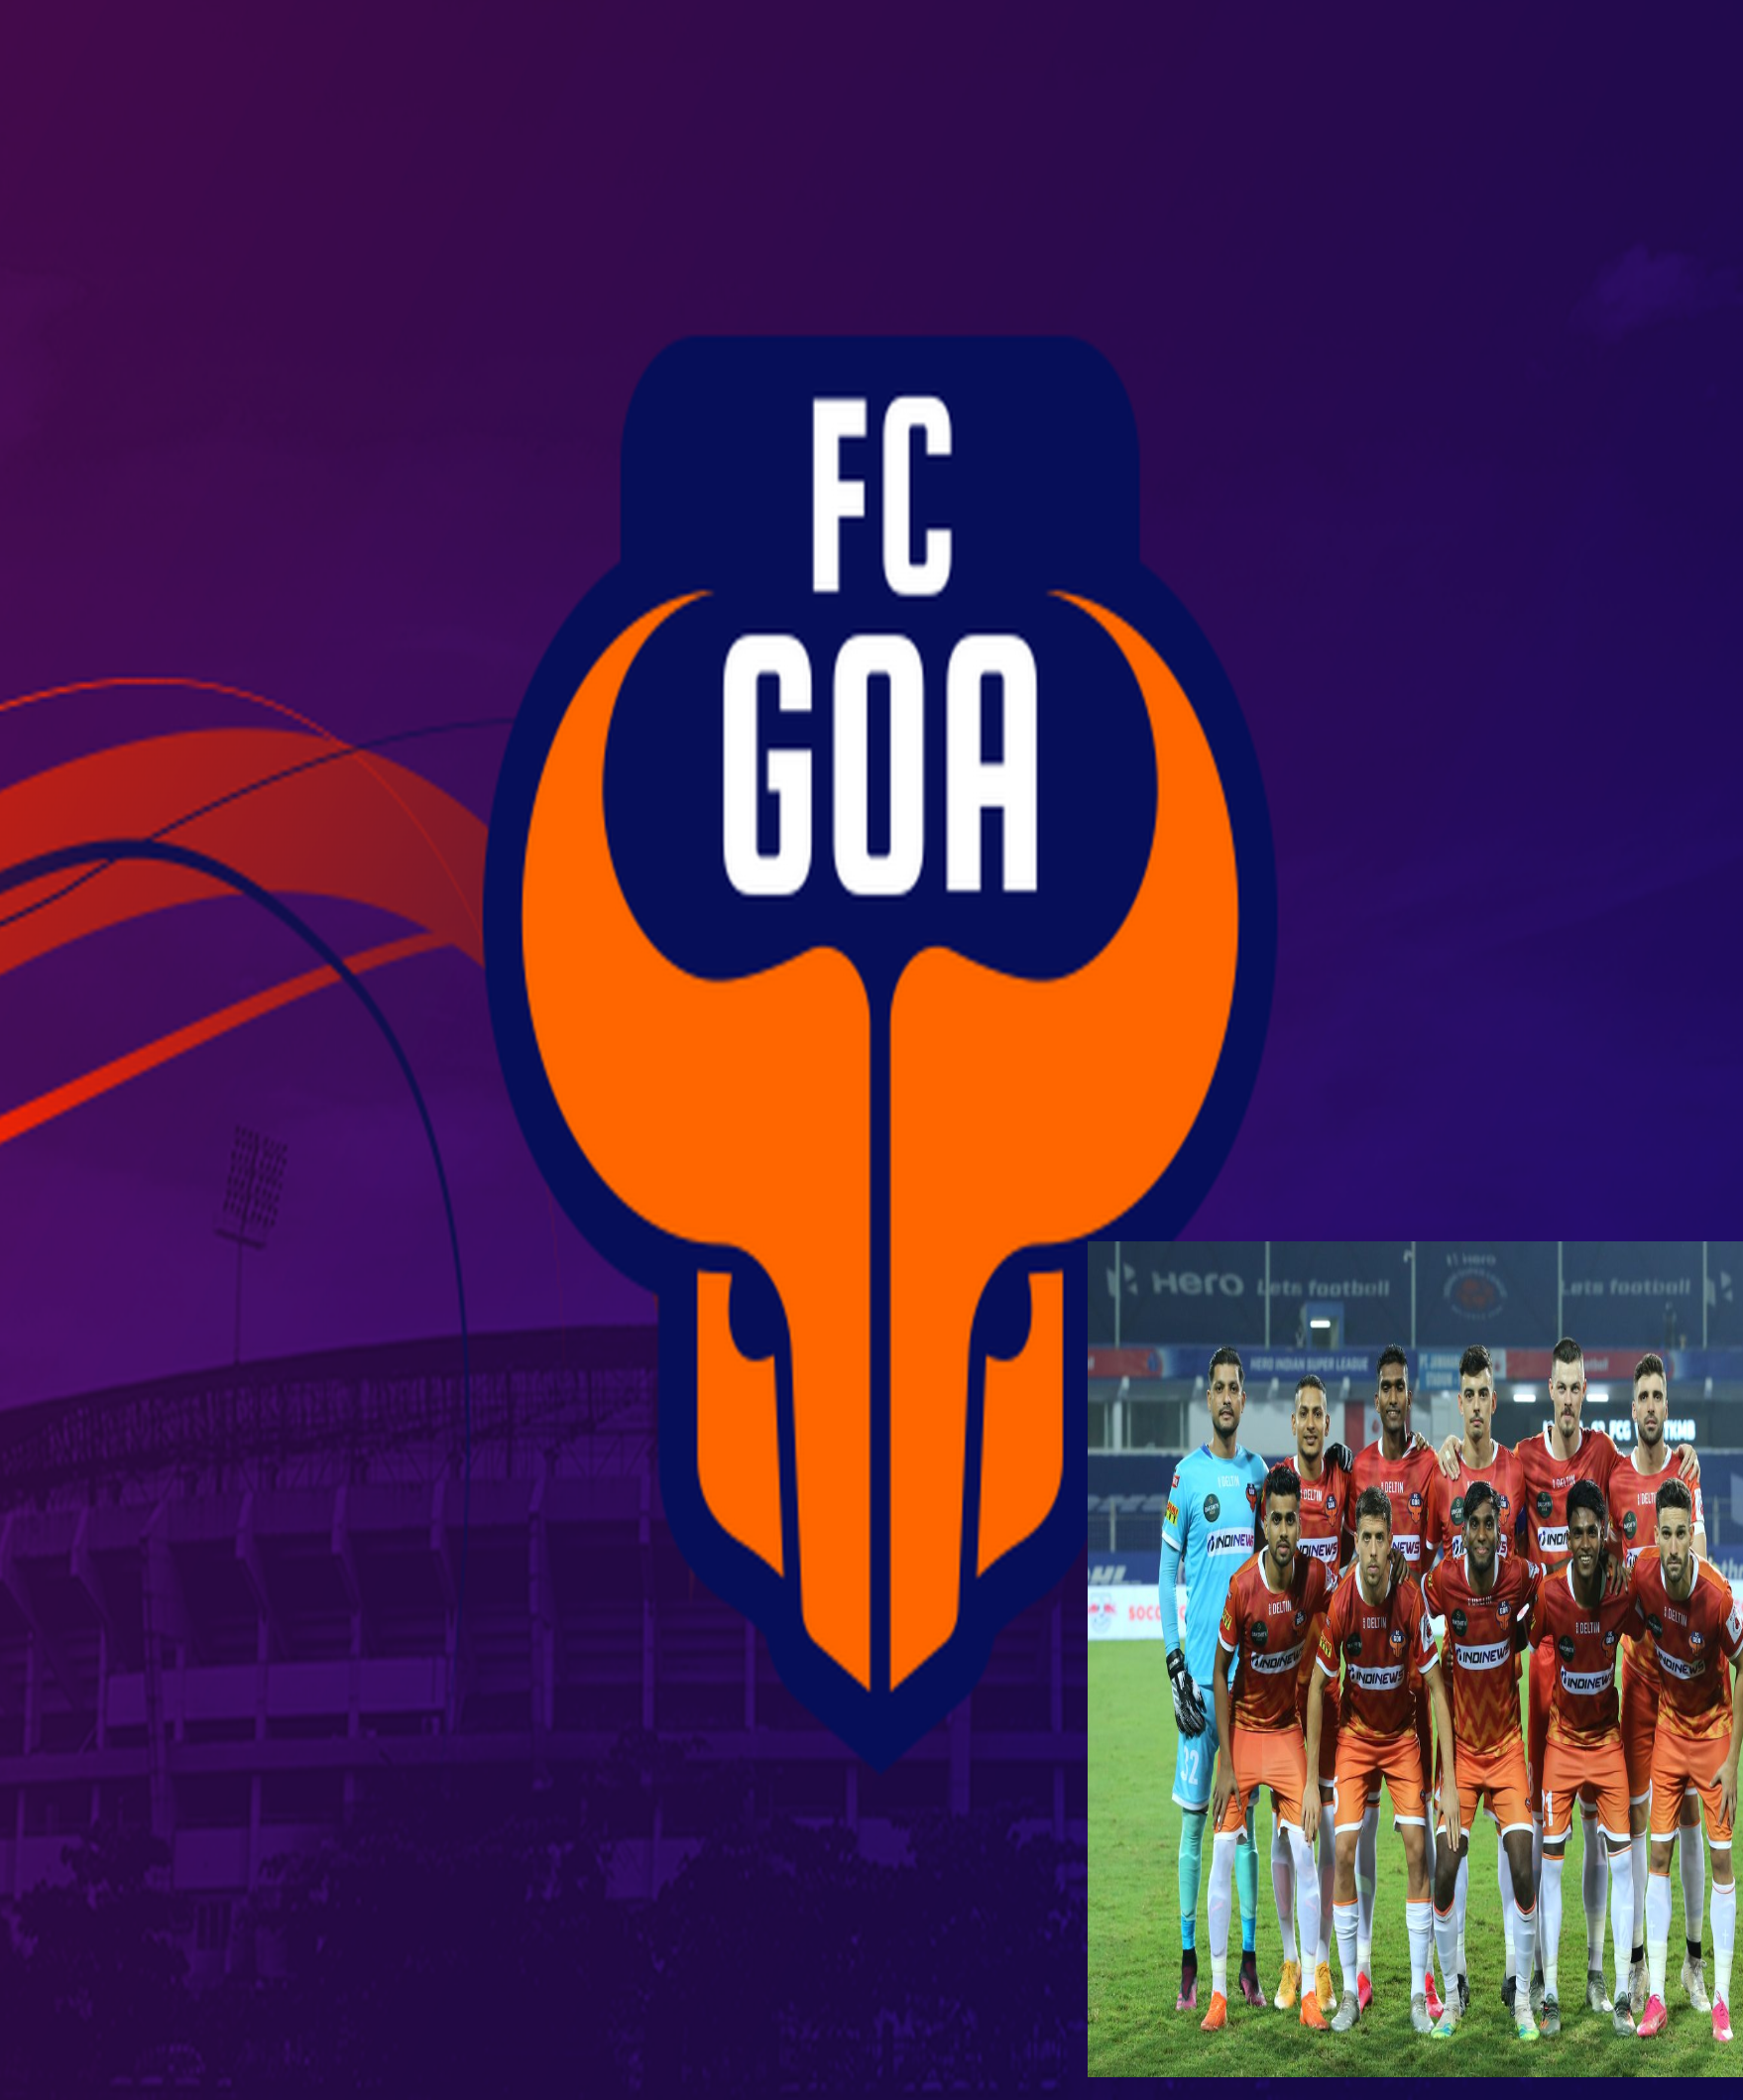 ﻿Indianfootball Club FC Goa